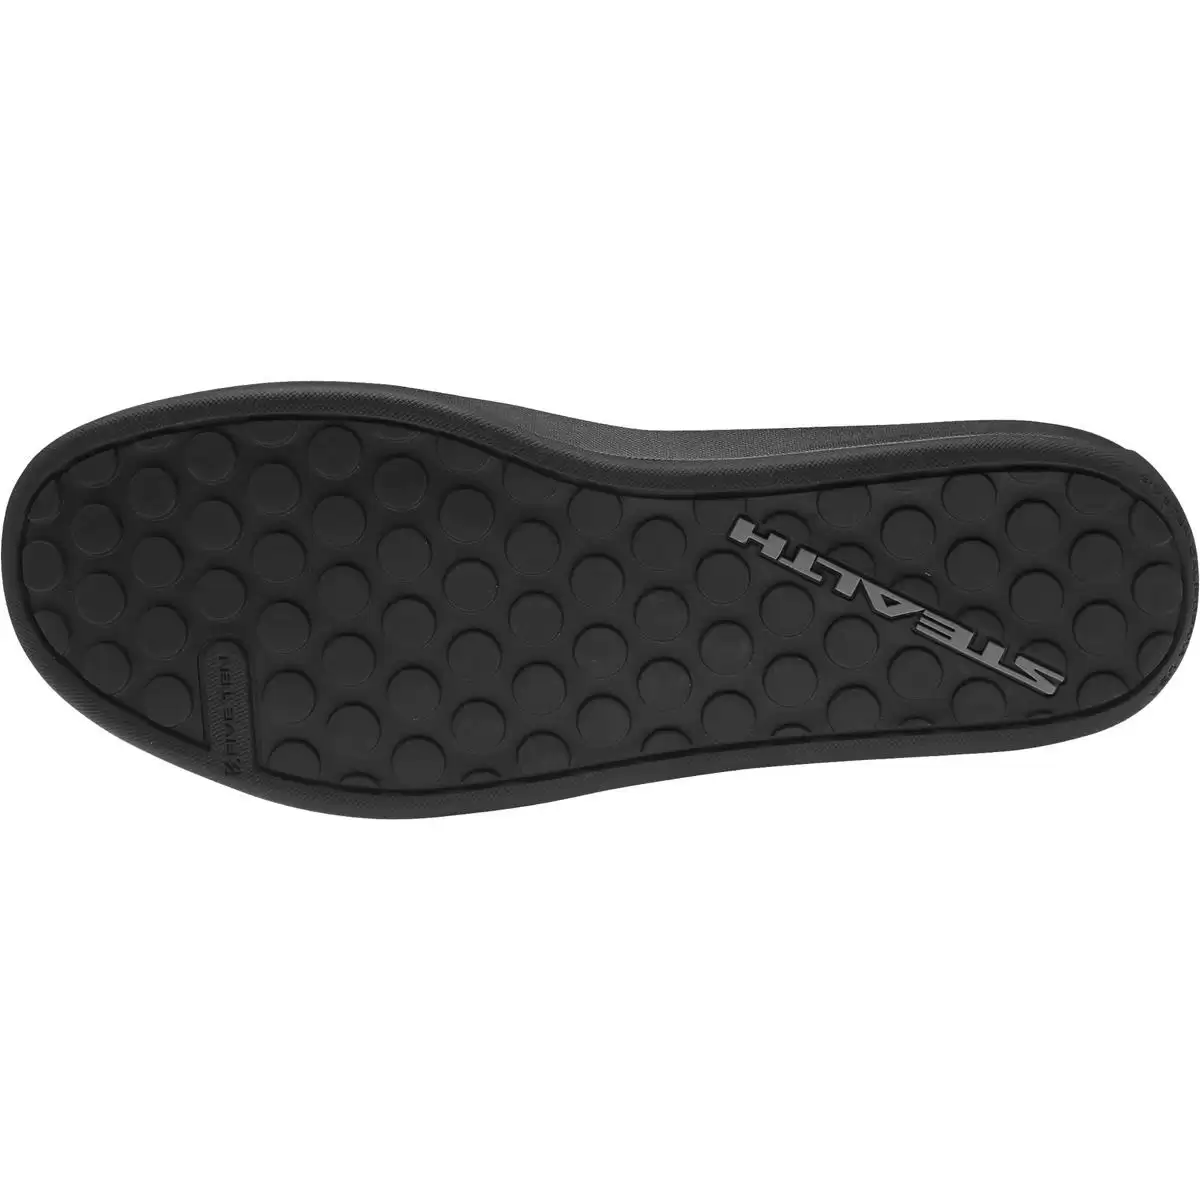 Chaussures Plates VTT Freerider Pro Primeblue Noir/Jaune Taille 42 #4